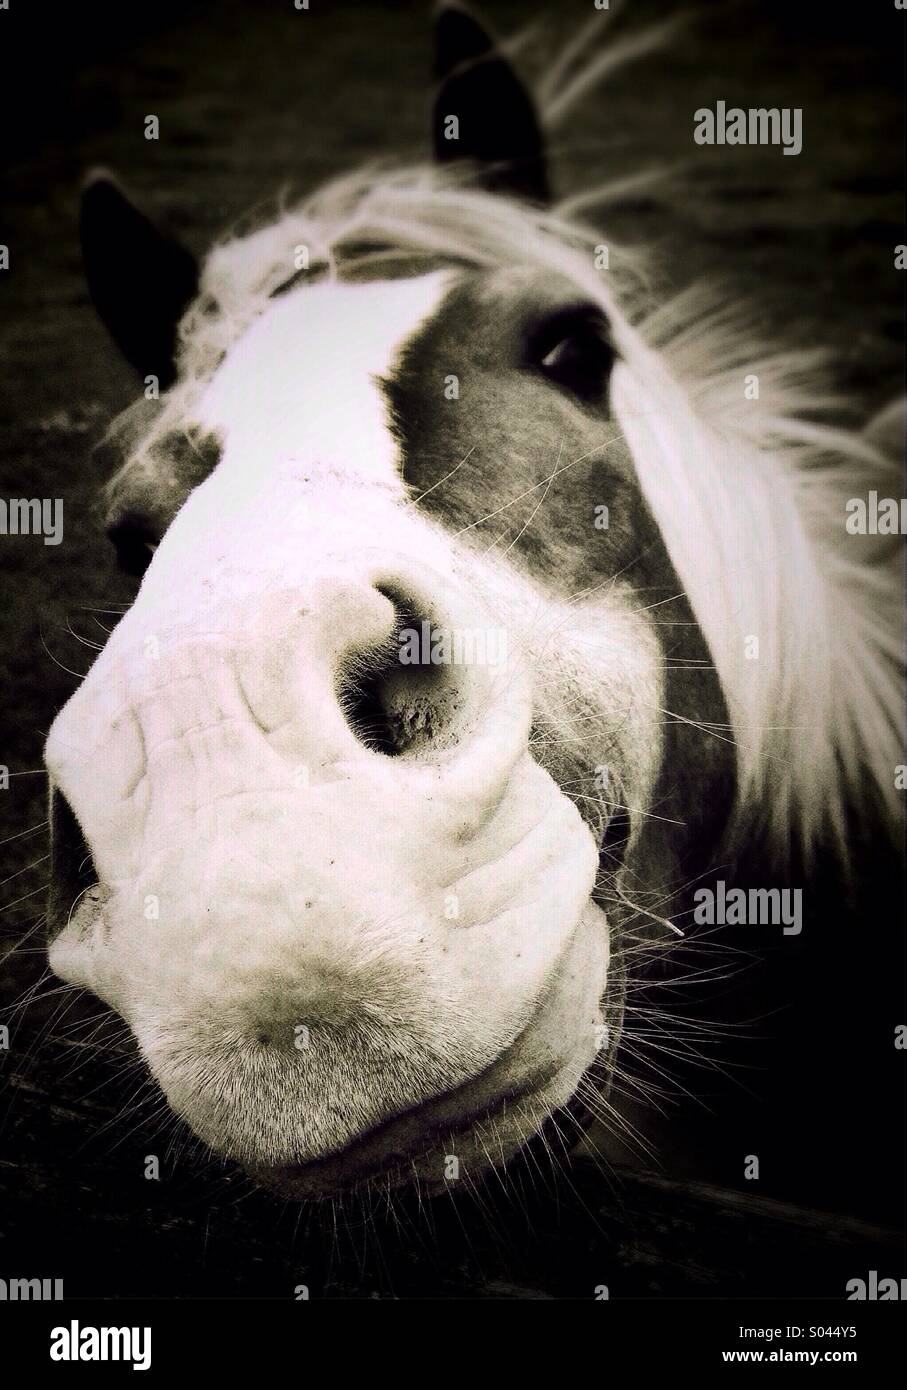 Close up of horse nostrils Stock Photo